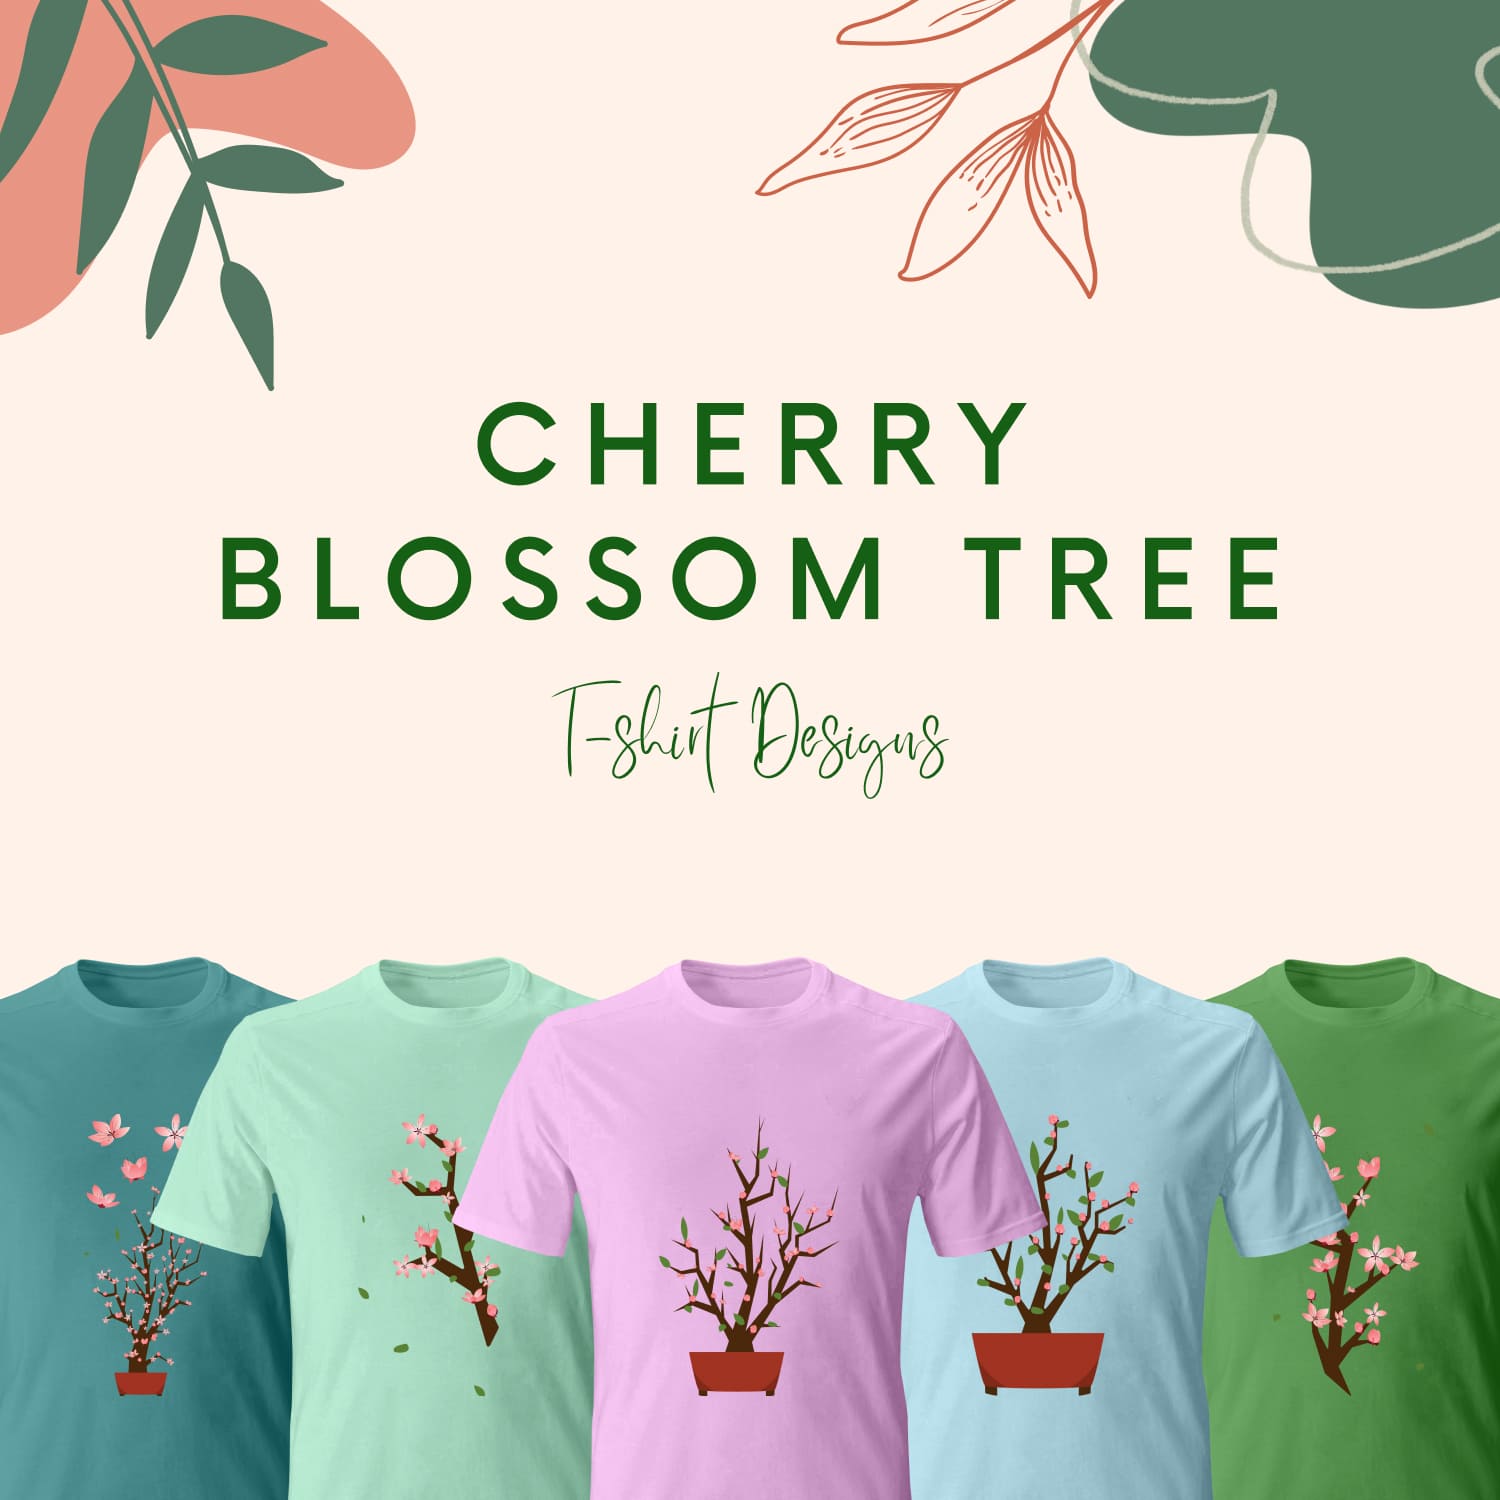 Prints cherry blossom tree on t-shirt designs.